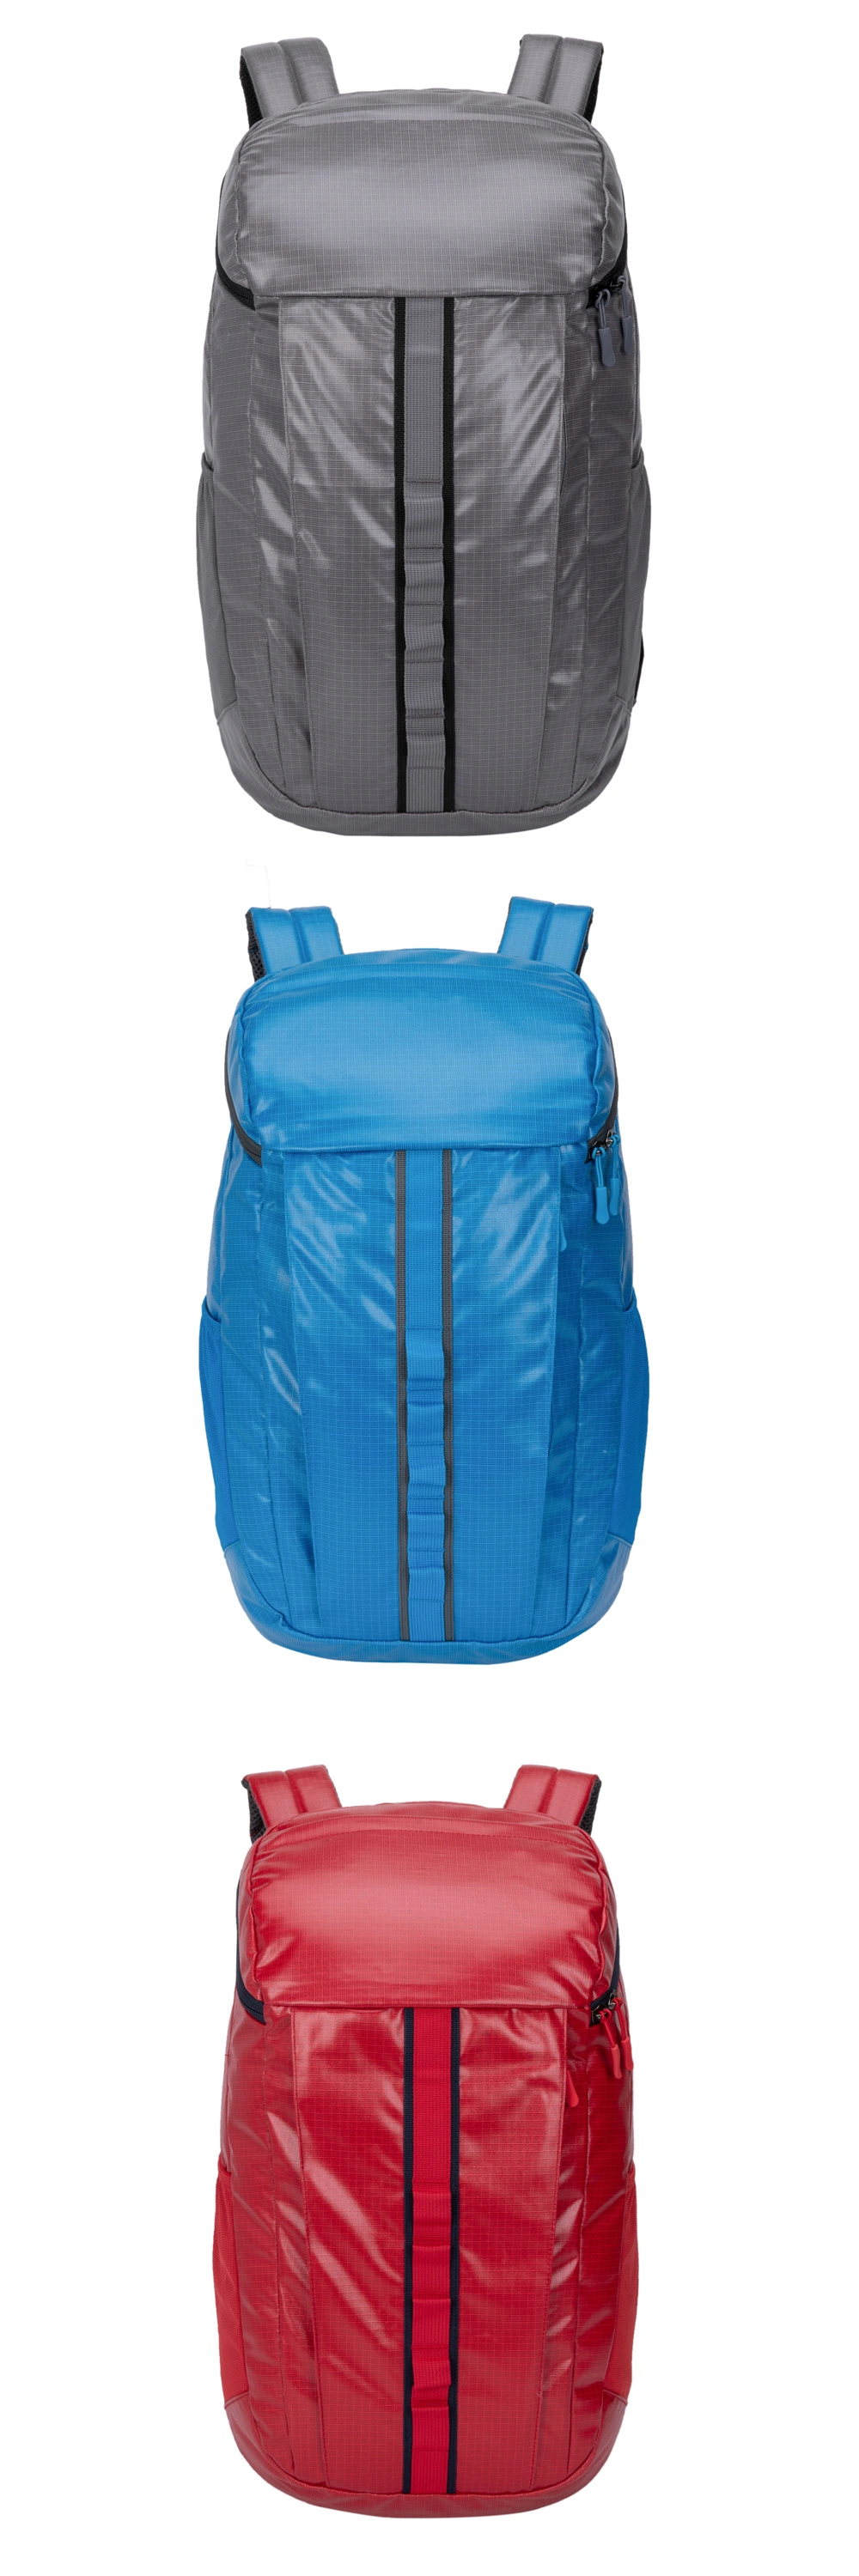 Large Lightweight Travel Waterproof Backpack Foldable Hiking Daypack